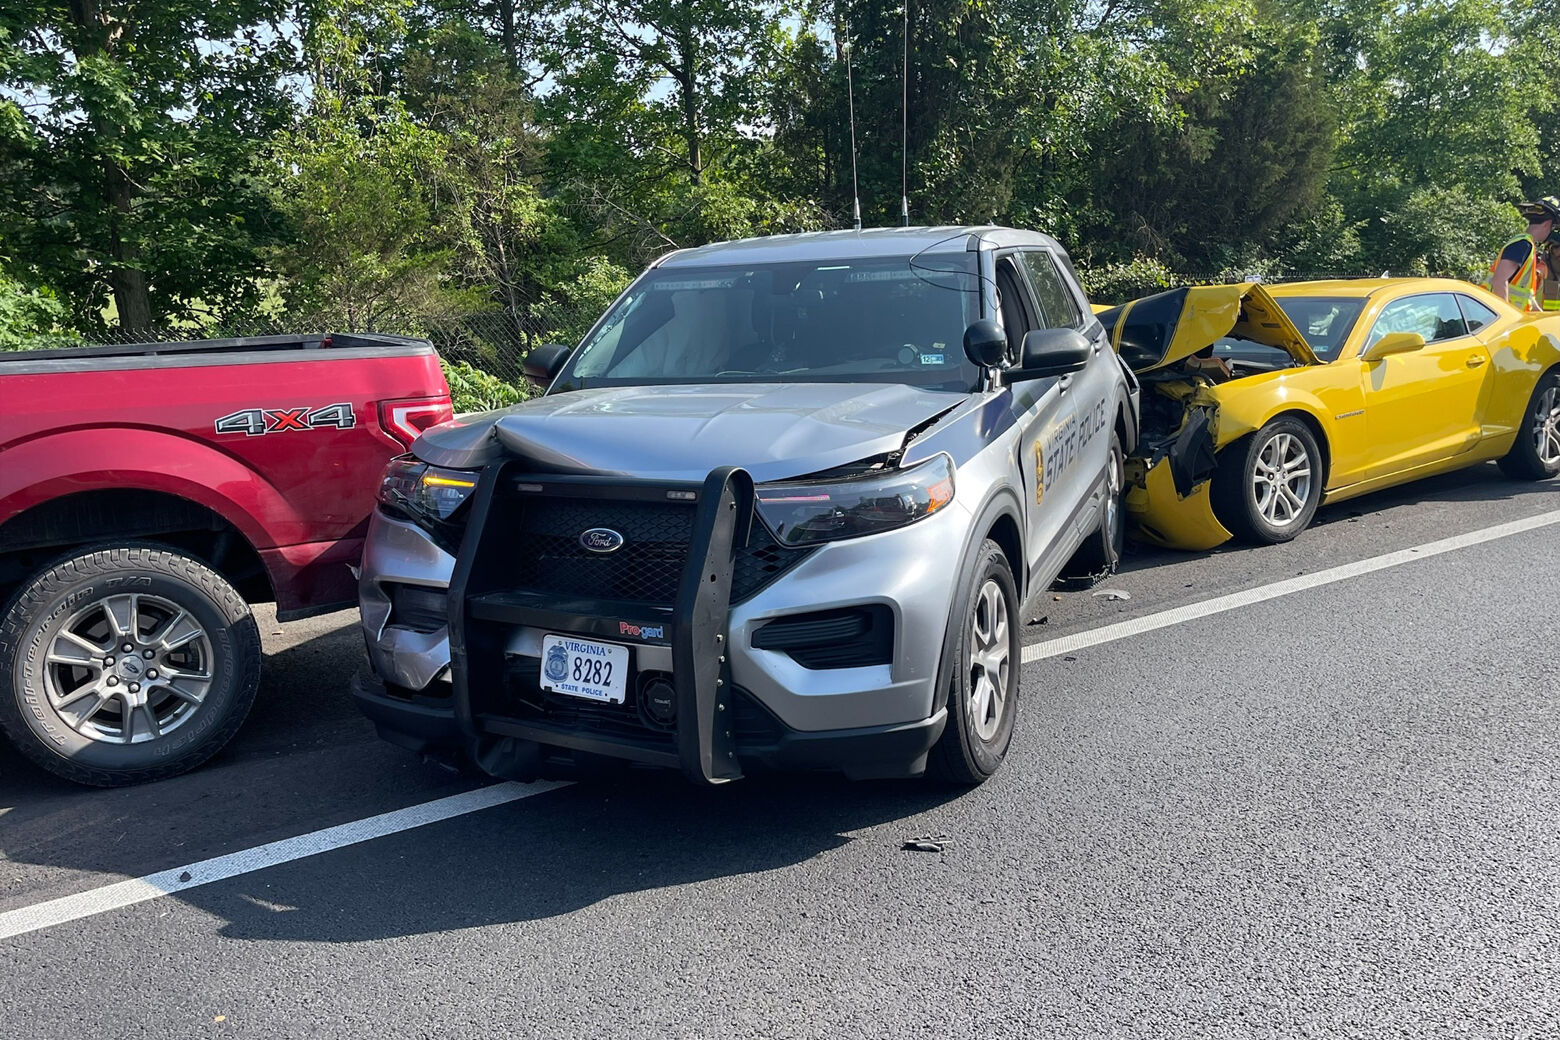 State Police Car Struck | I-66 car accident